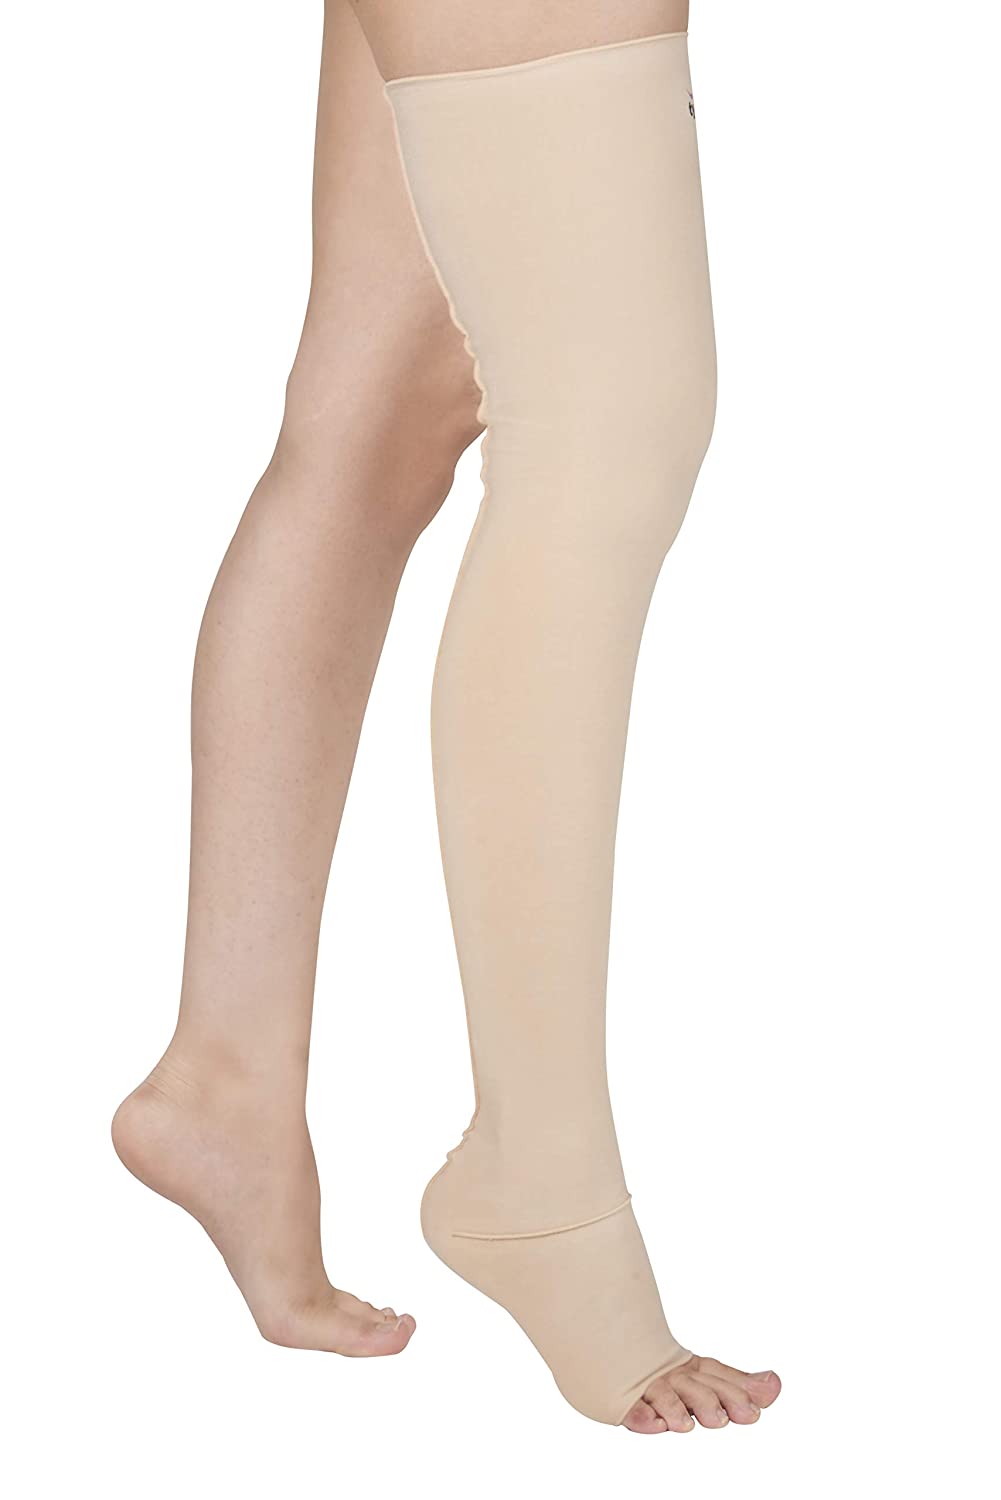 AHS Compression Stockings Leg Mid Thigh (Open Toe) 20-30mmHg-1